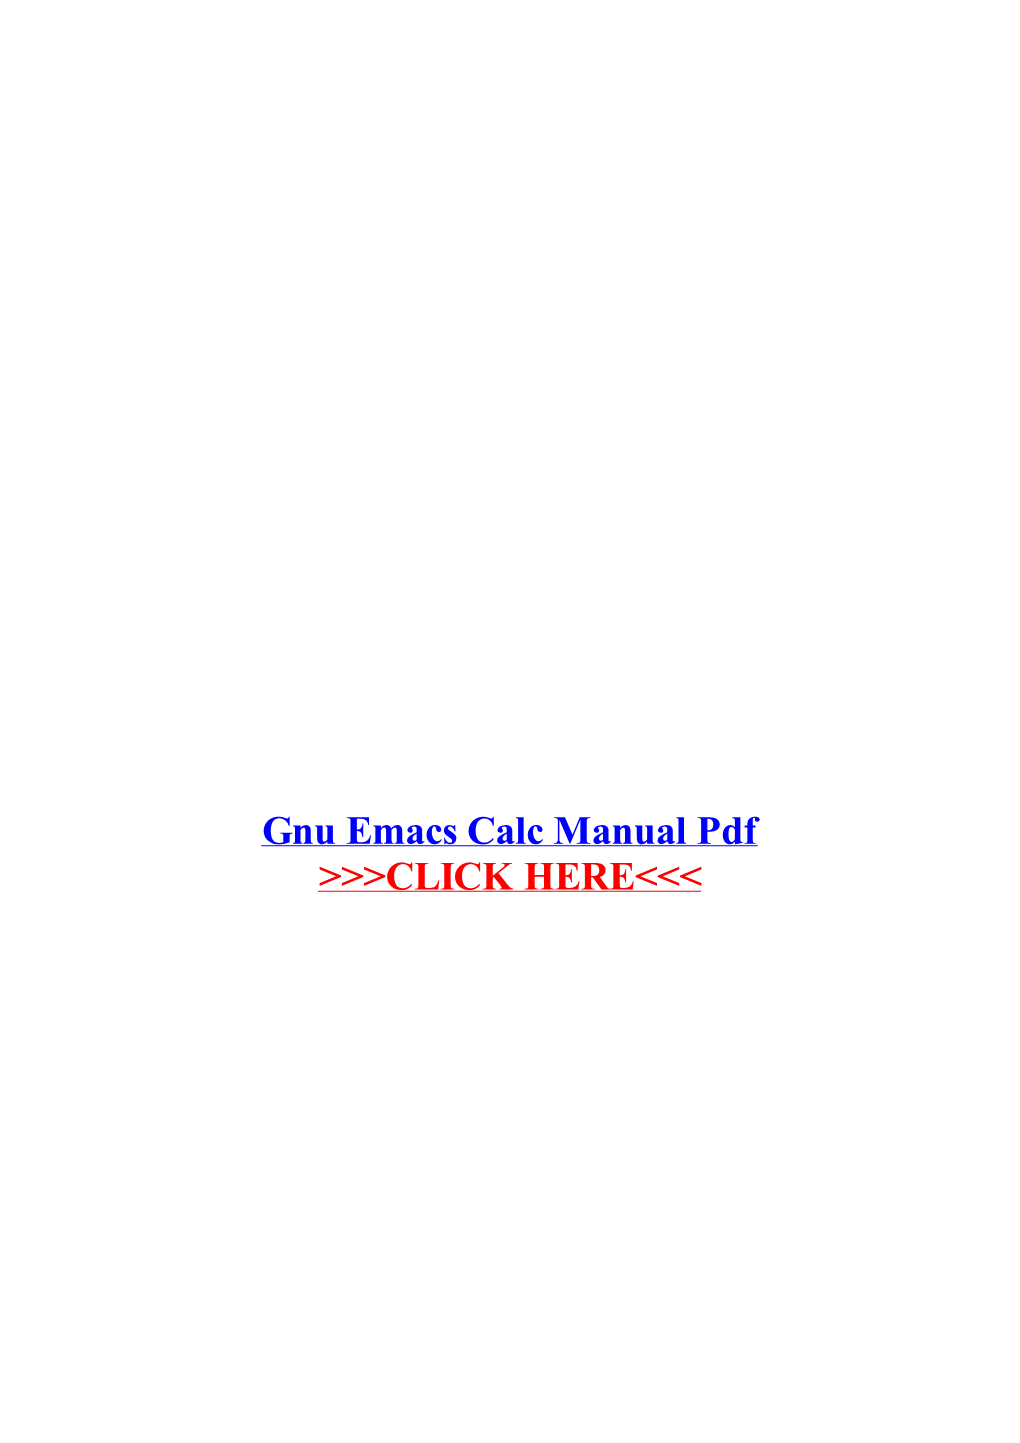 Gnu Emacs Calc Manual Pdf.Pdf